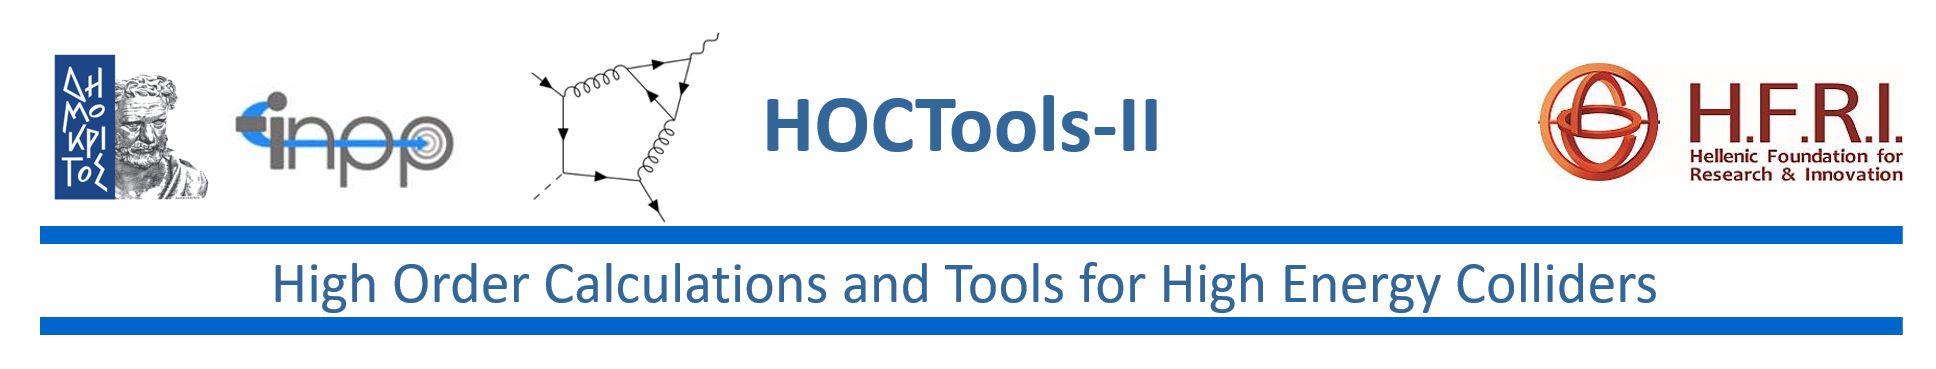 HOCtools-logo